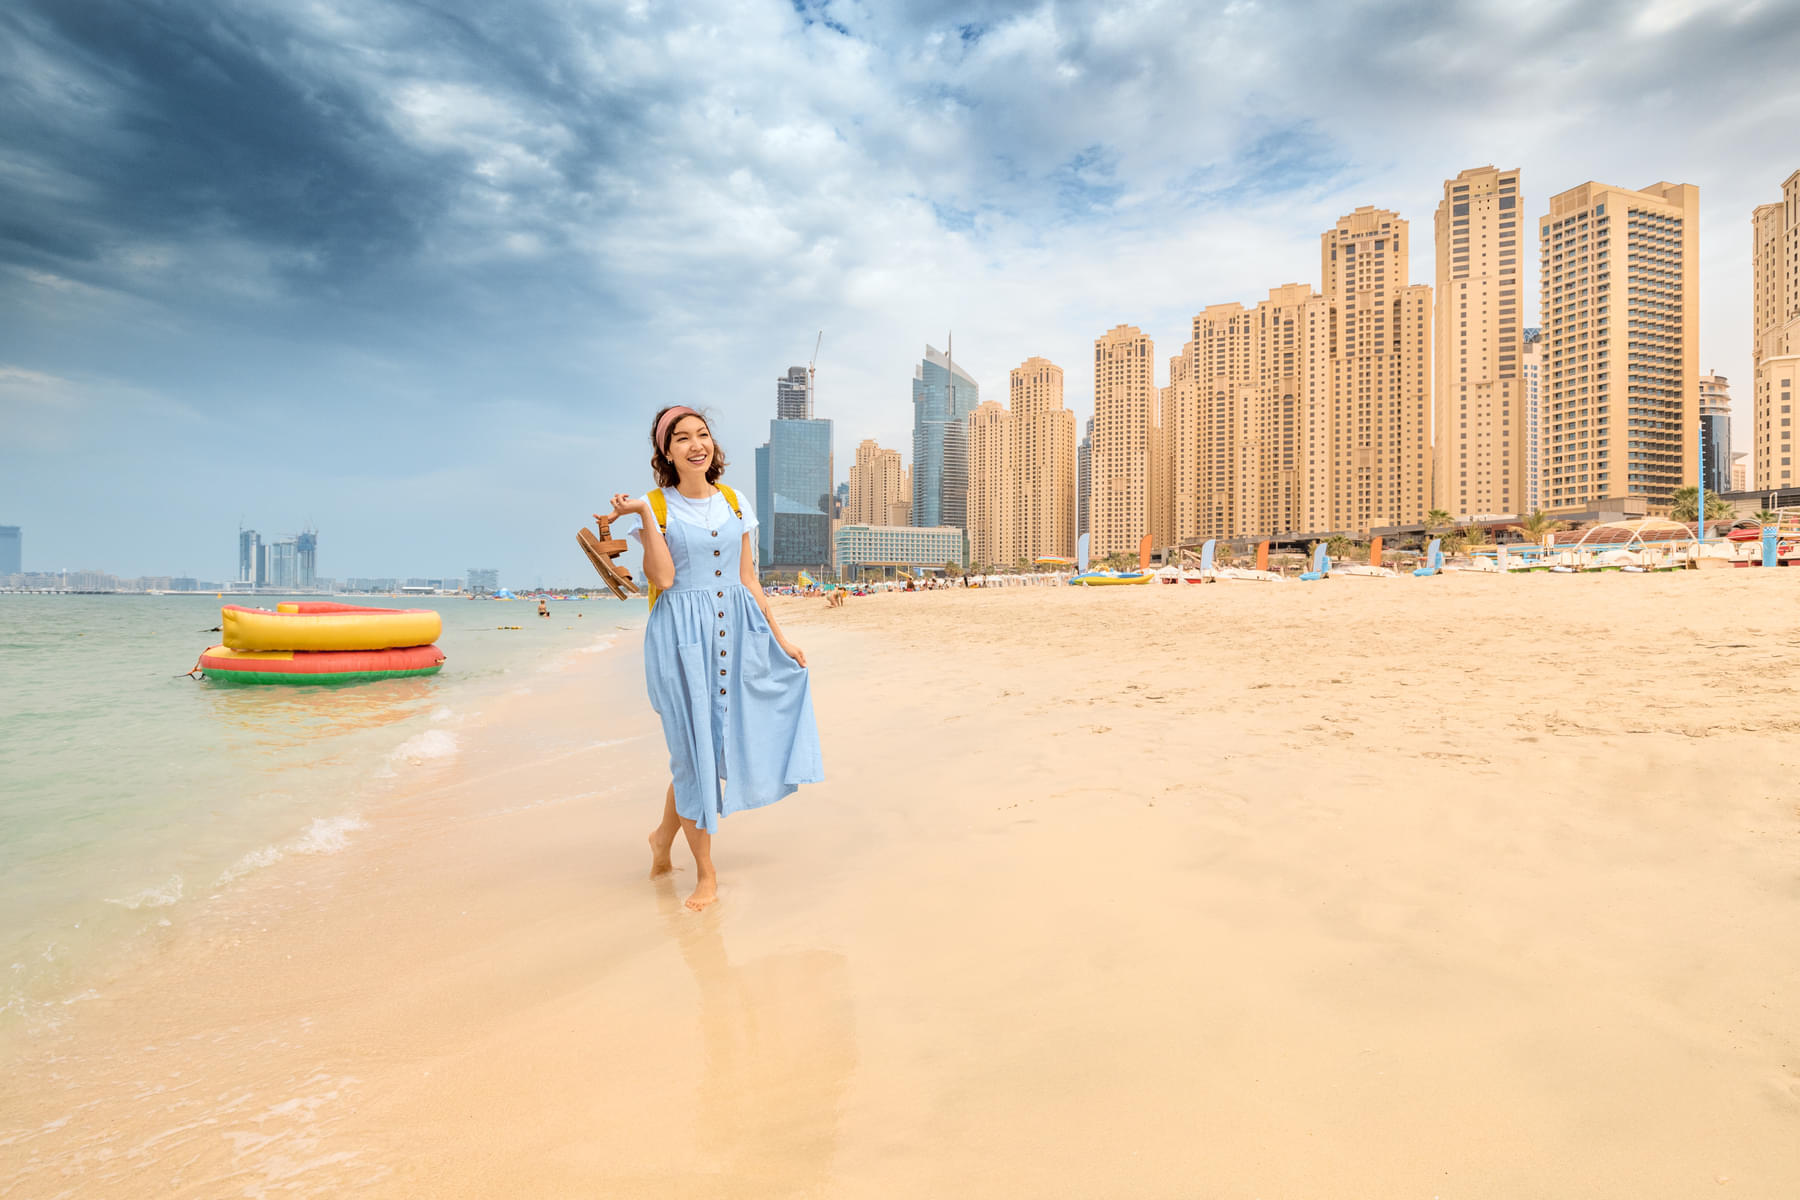 How to Get to Dubai Frame from Jumeirah Beach